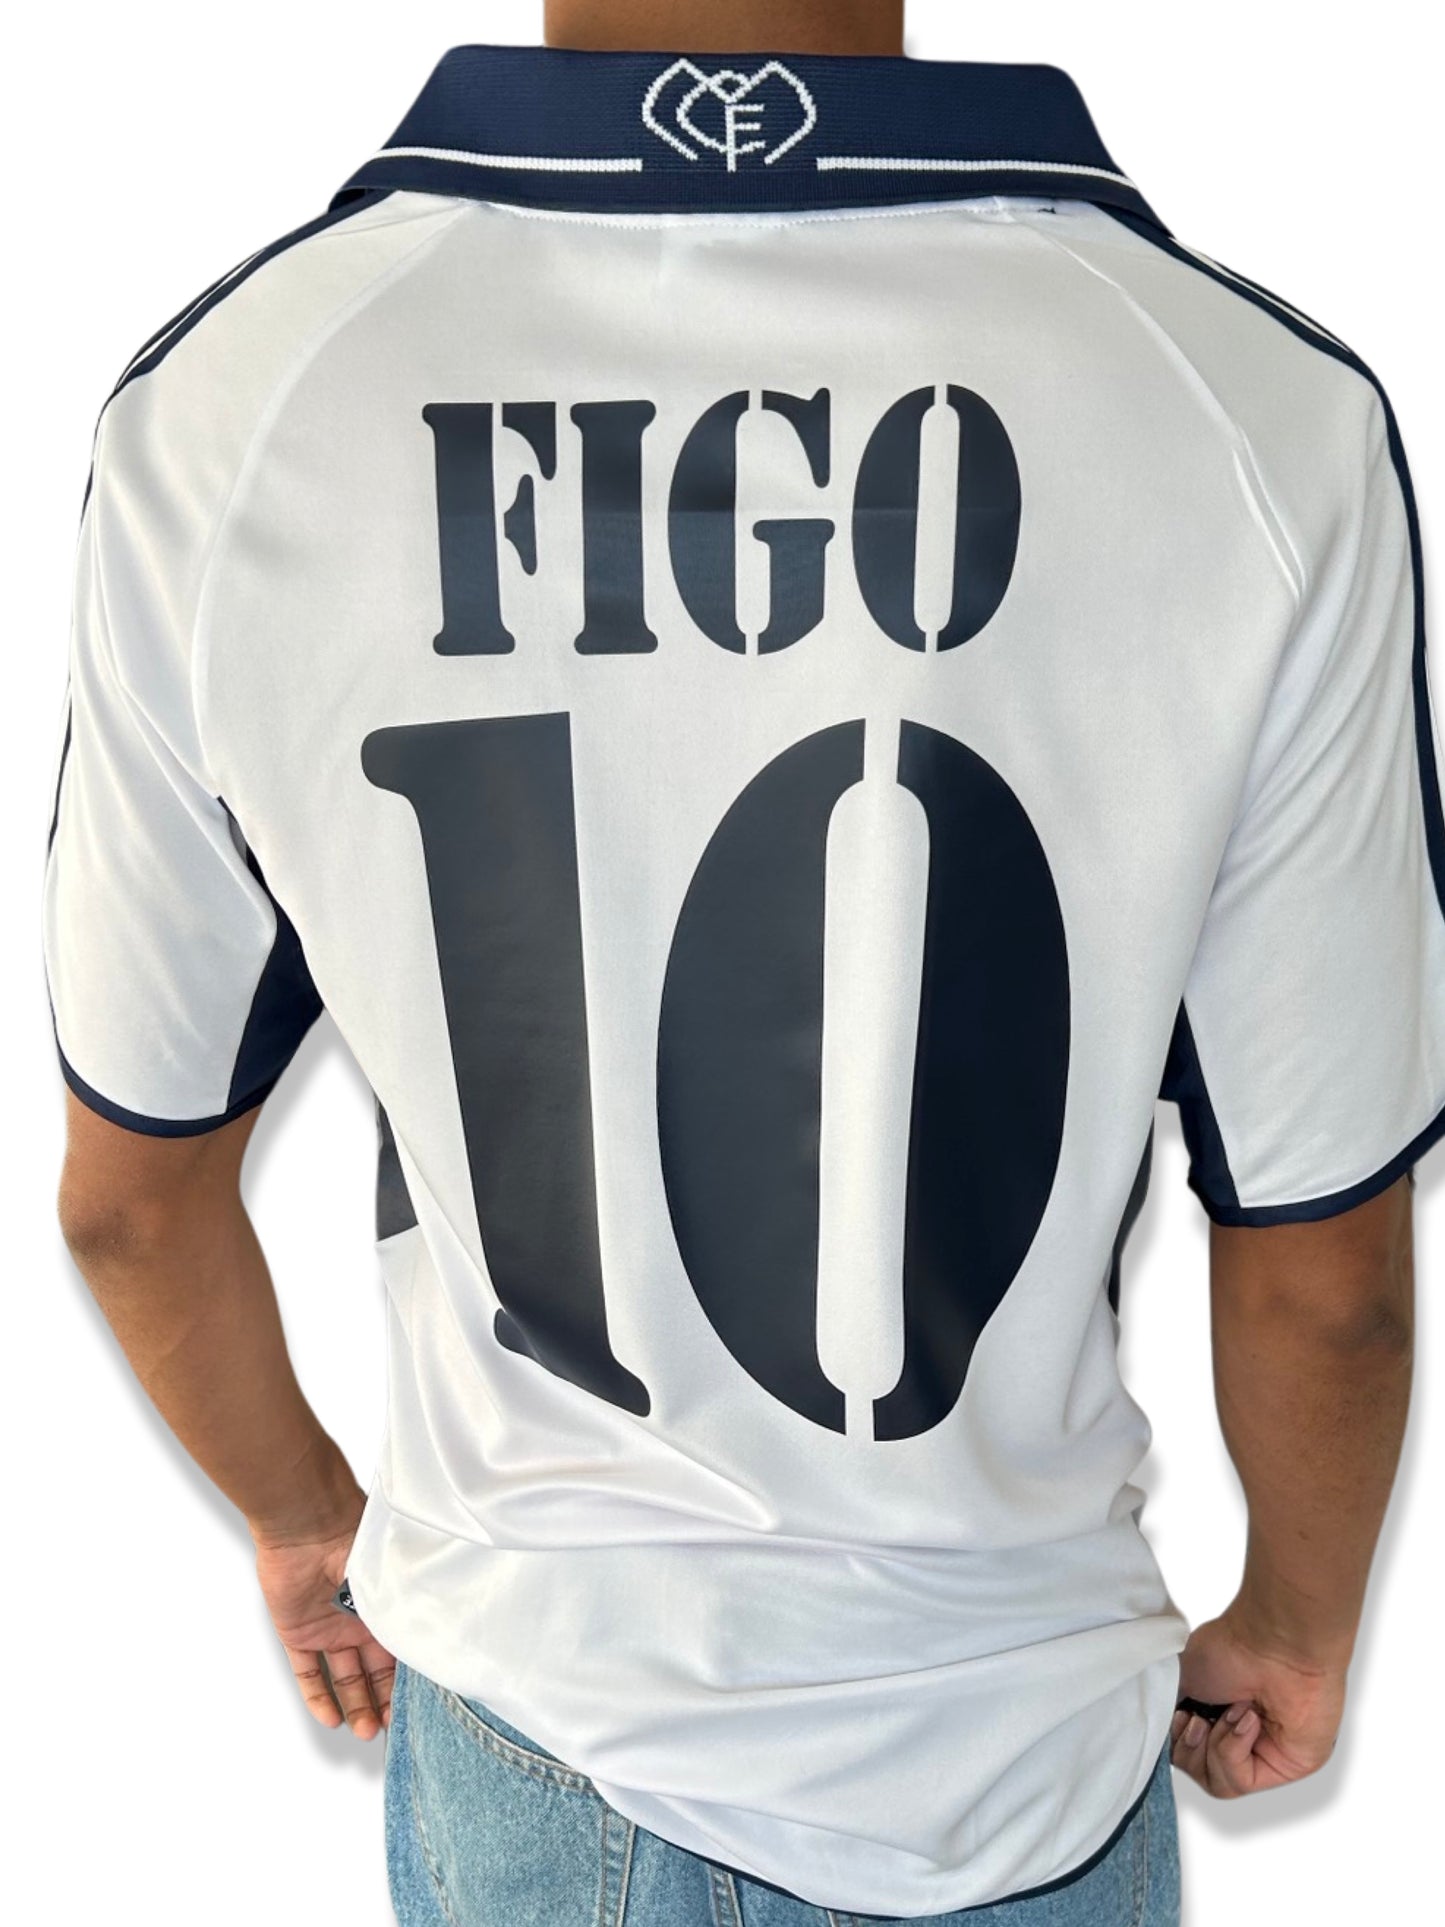 Real Madrid CF 2000-01 Home Shirt, #10 Luis Figo